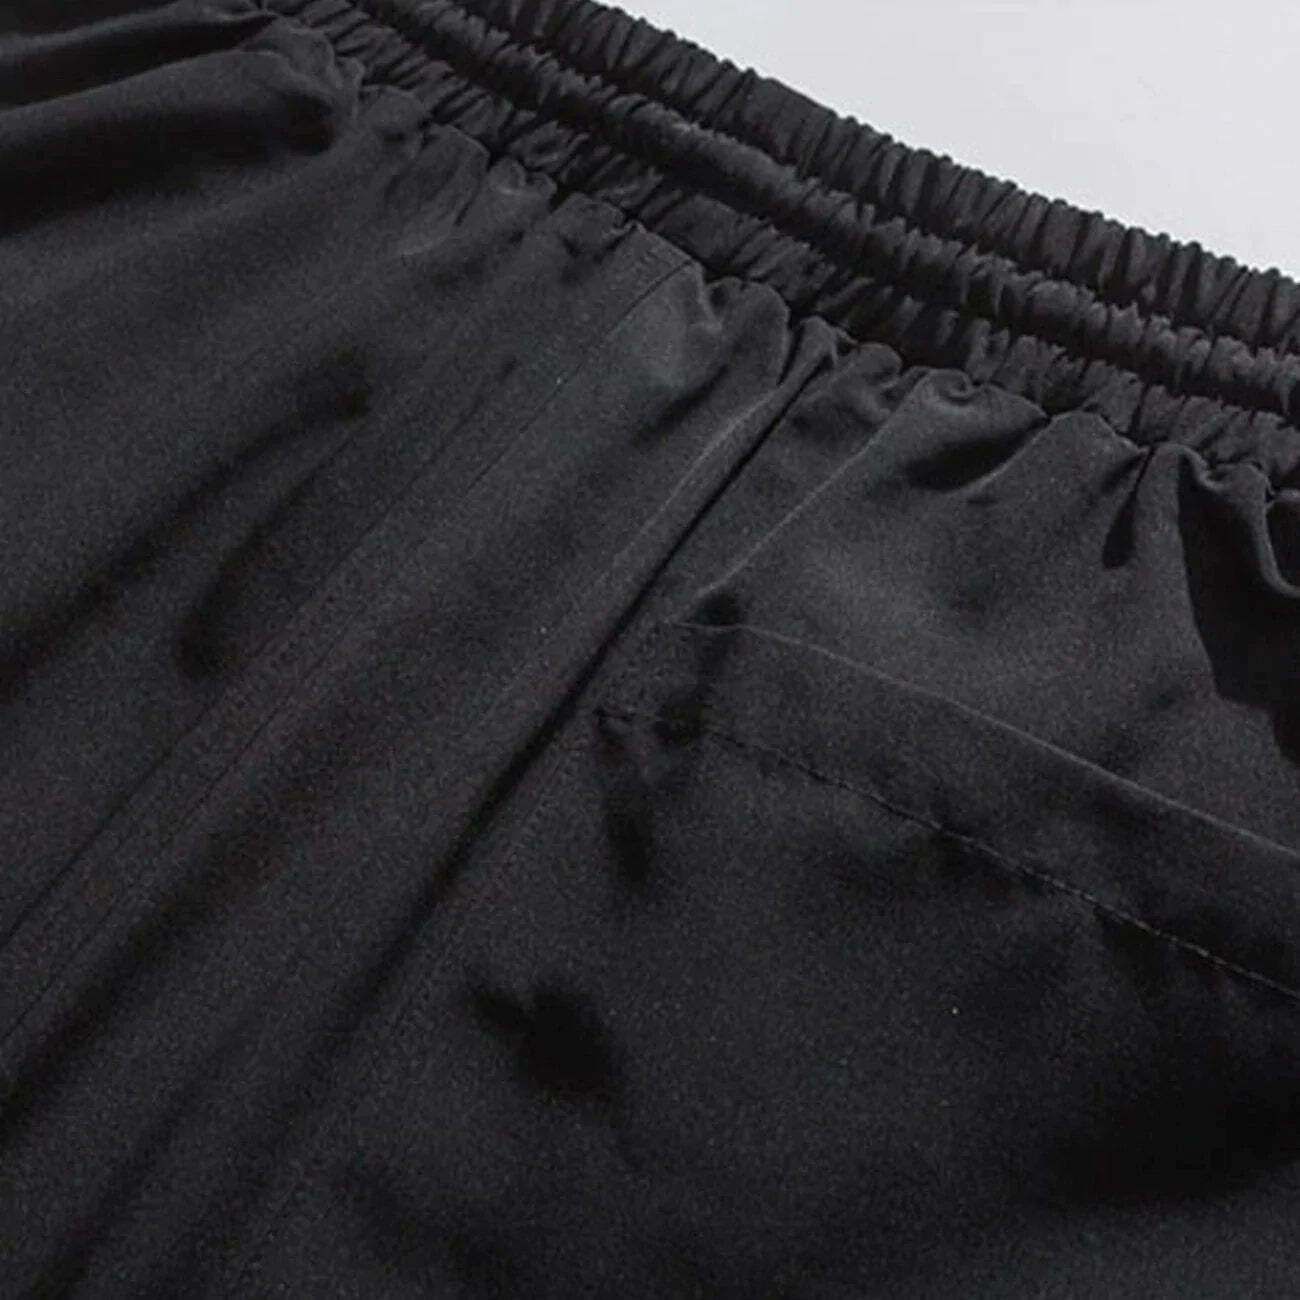 retro drawstring shorts edgy and vibrant streetwear fashion 4547